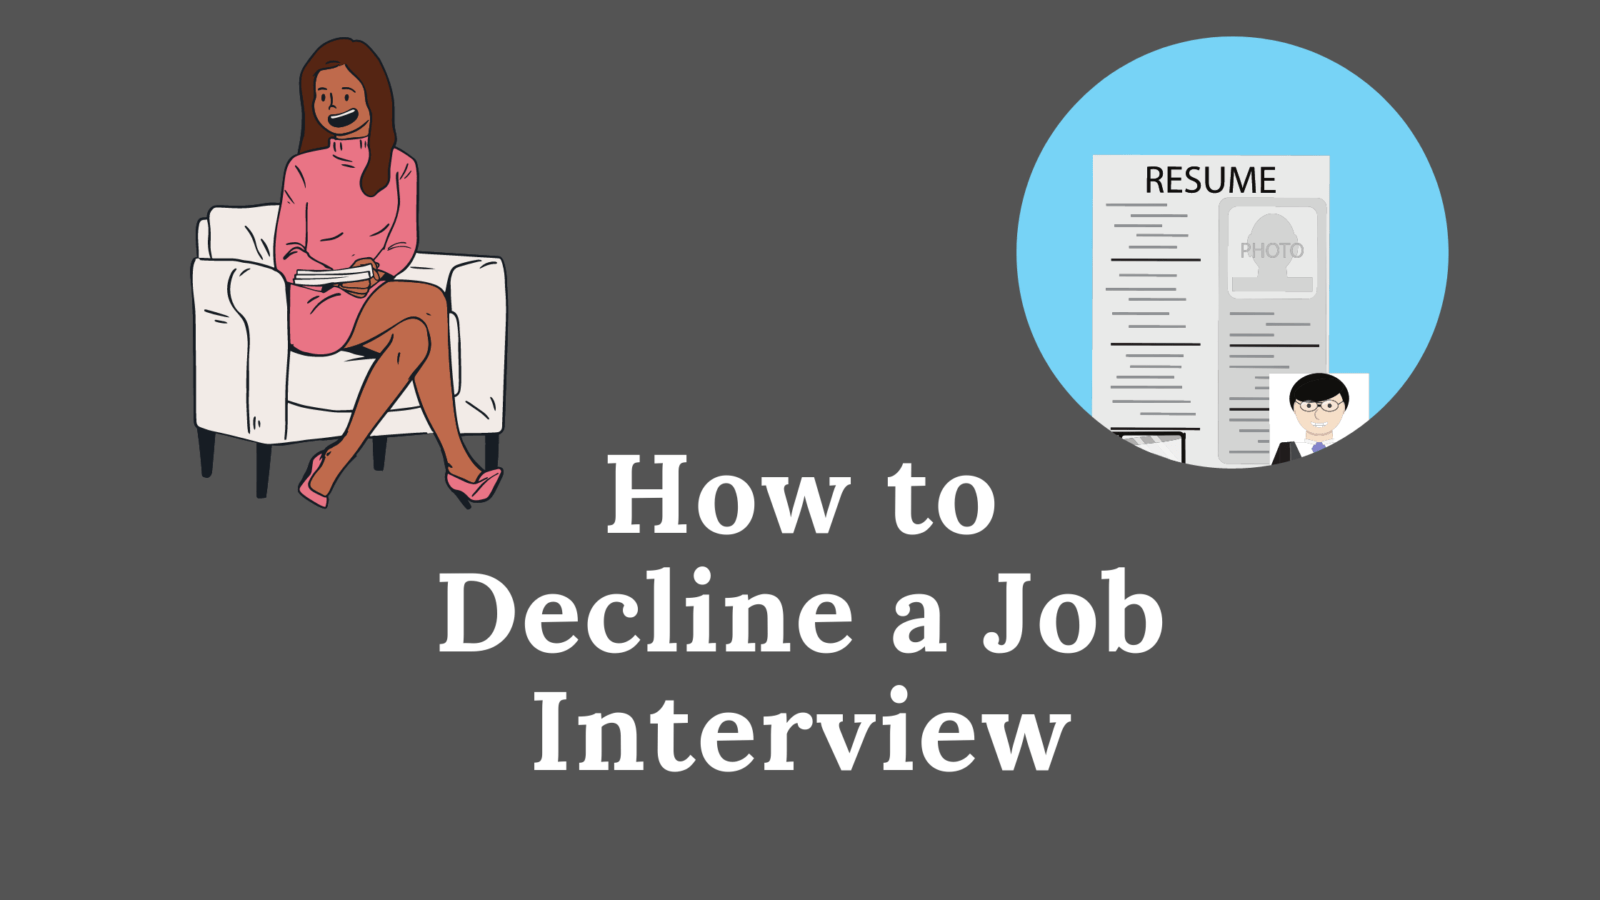 How to Decline a Job Interview